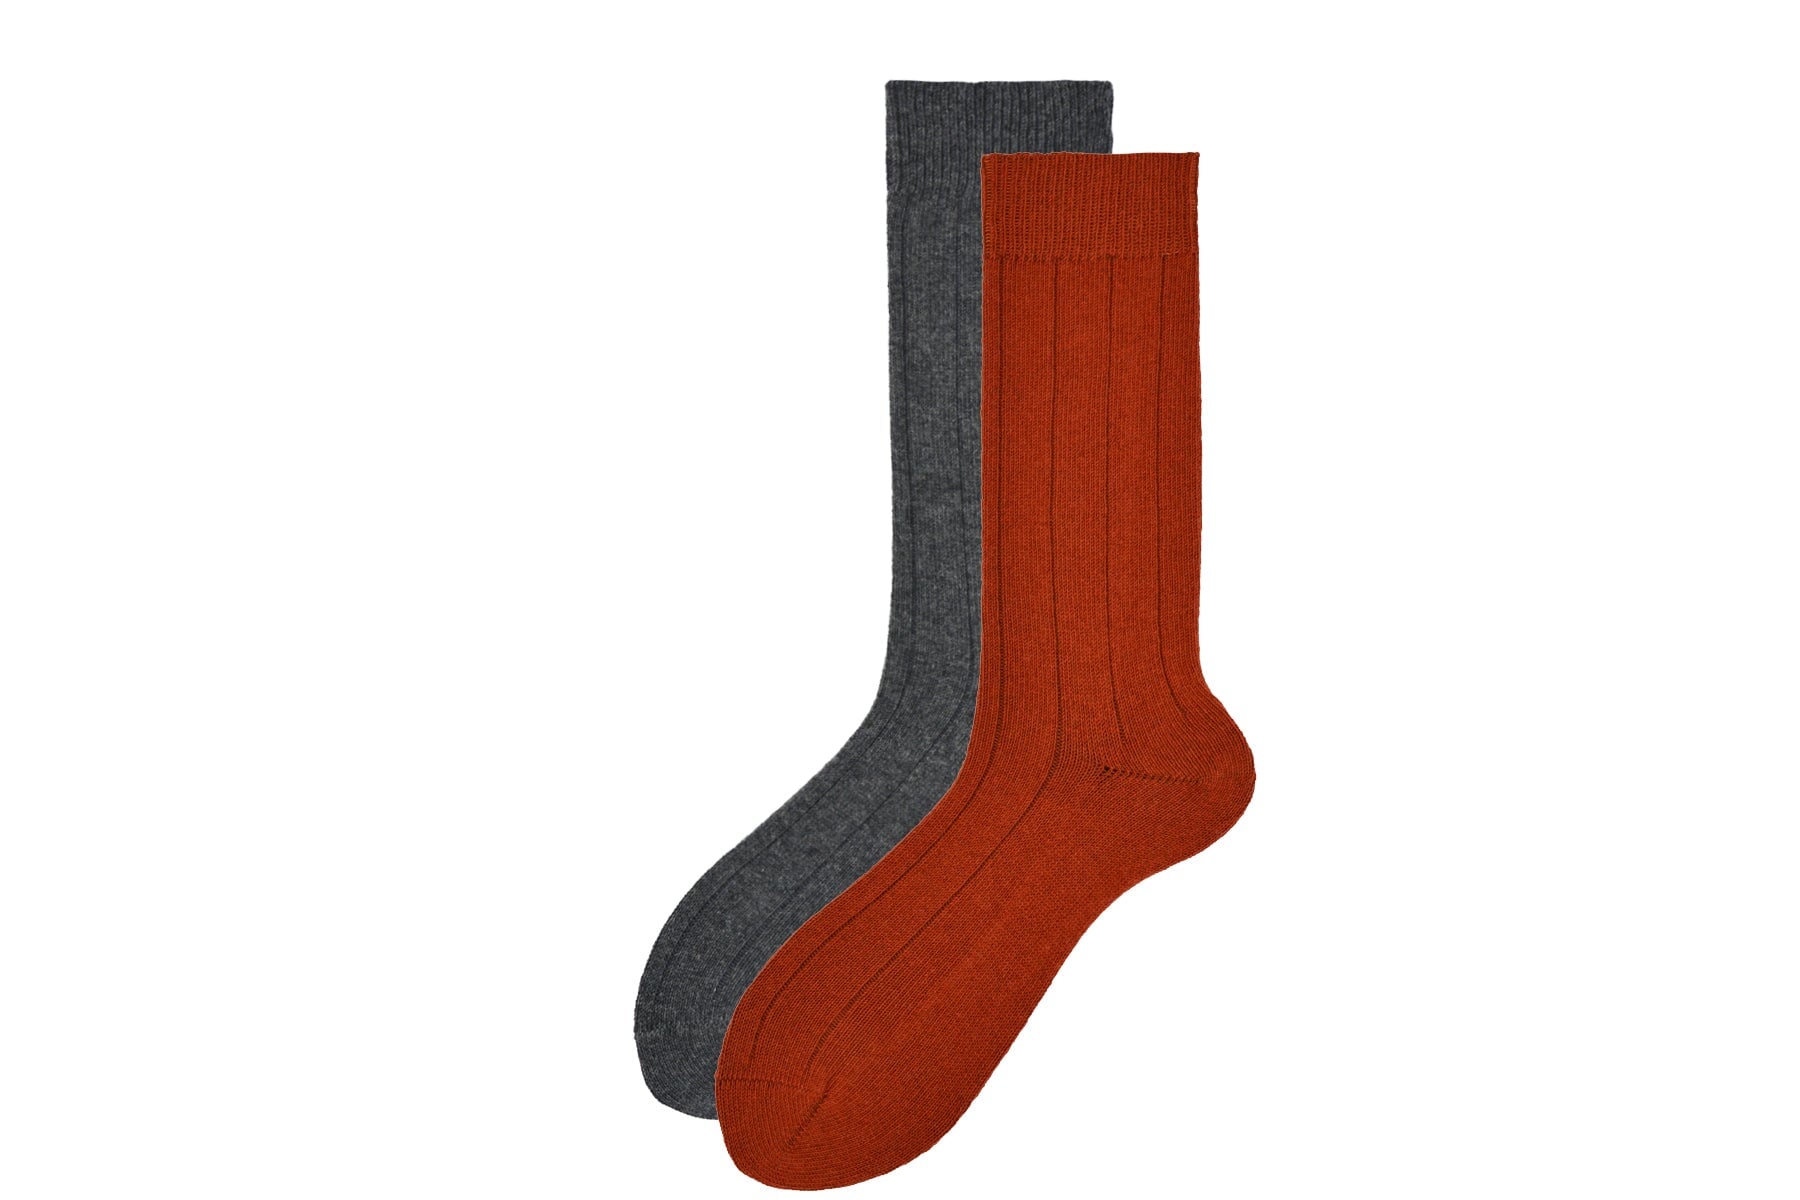 Herren Socken aus Merino Wolle in Grau - Duvet Herren Socken Alto Milano 